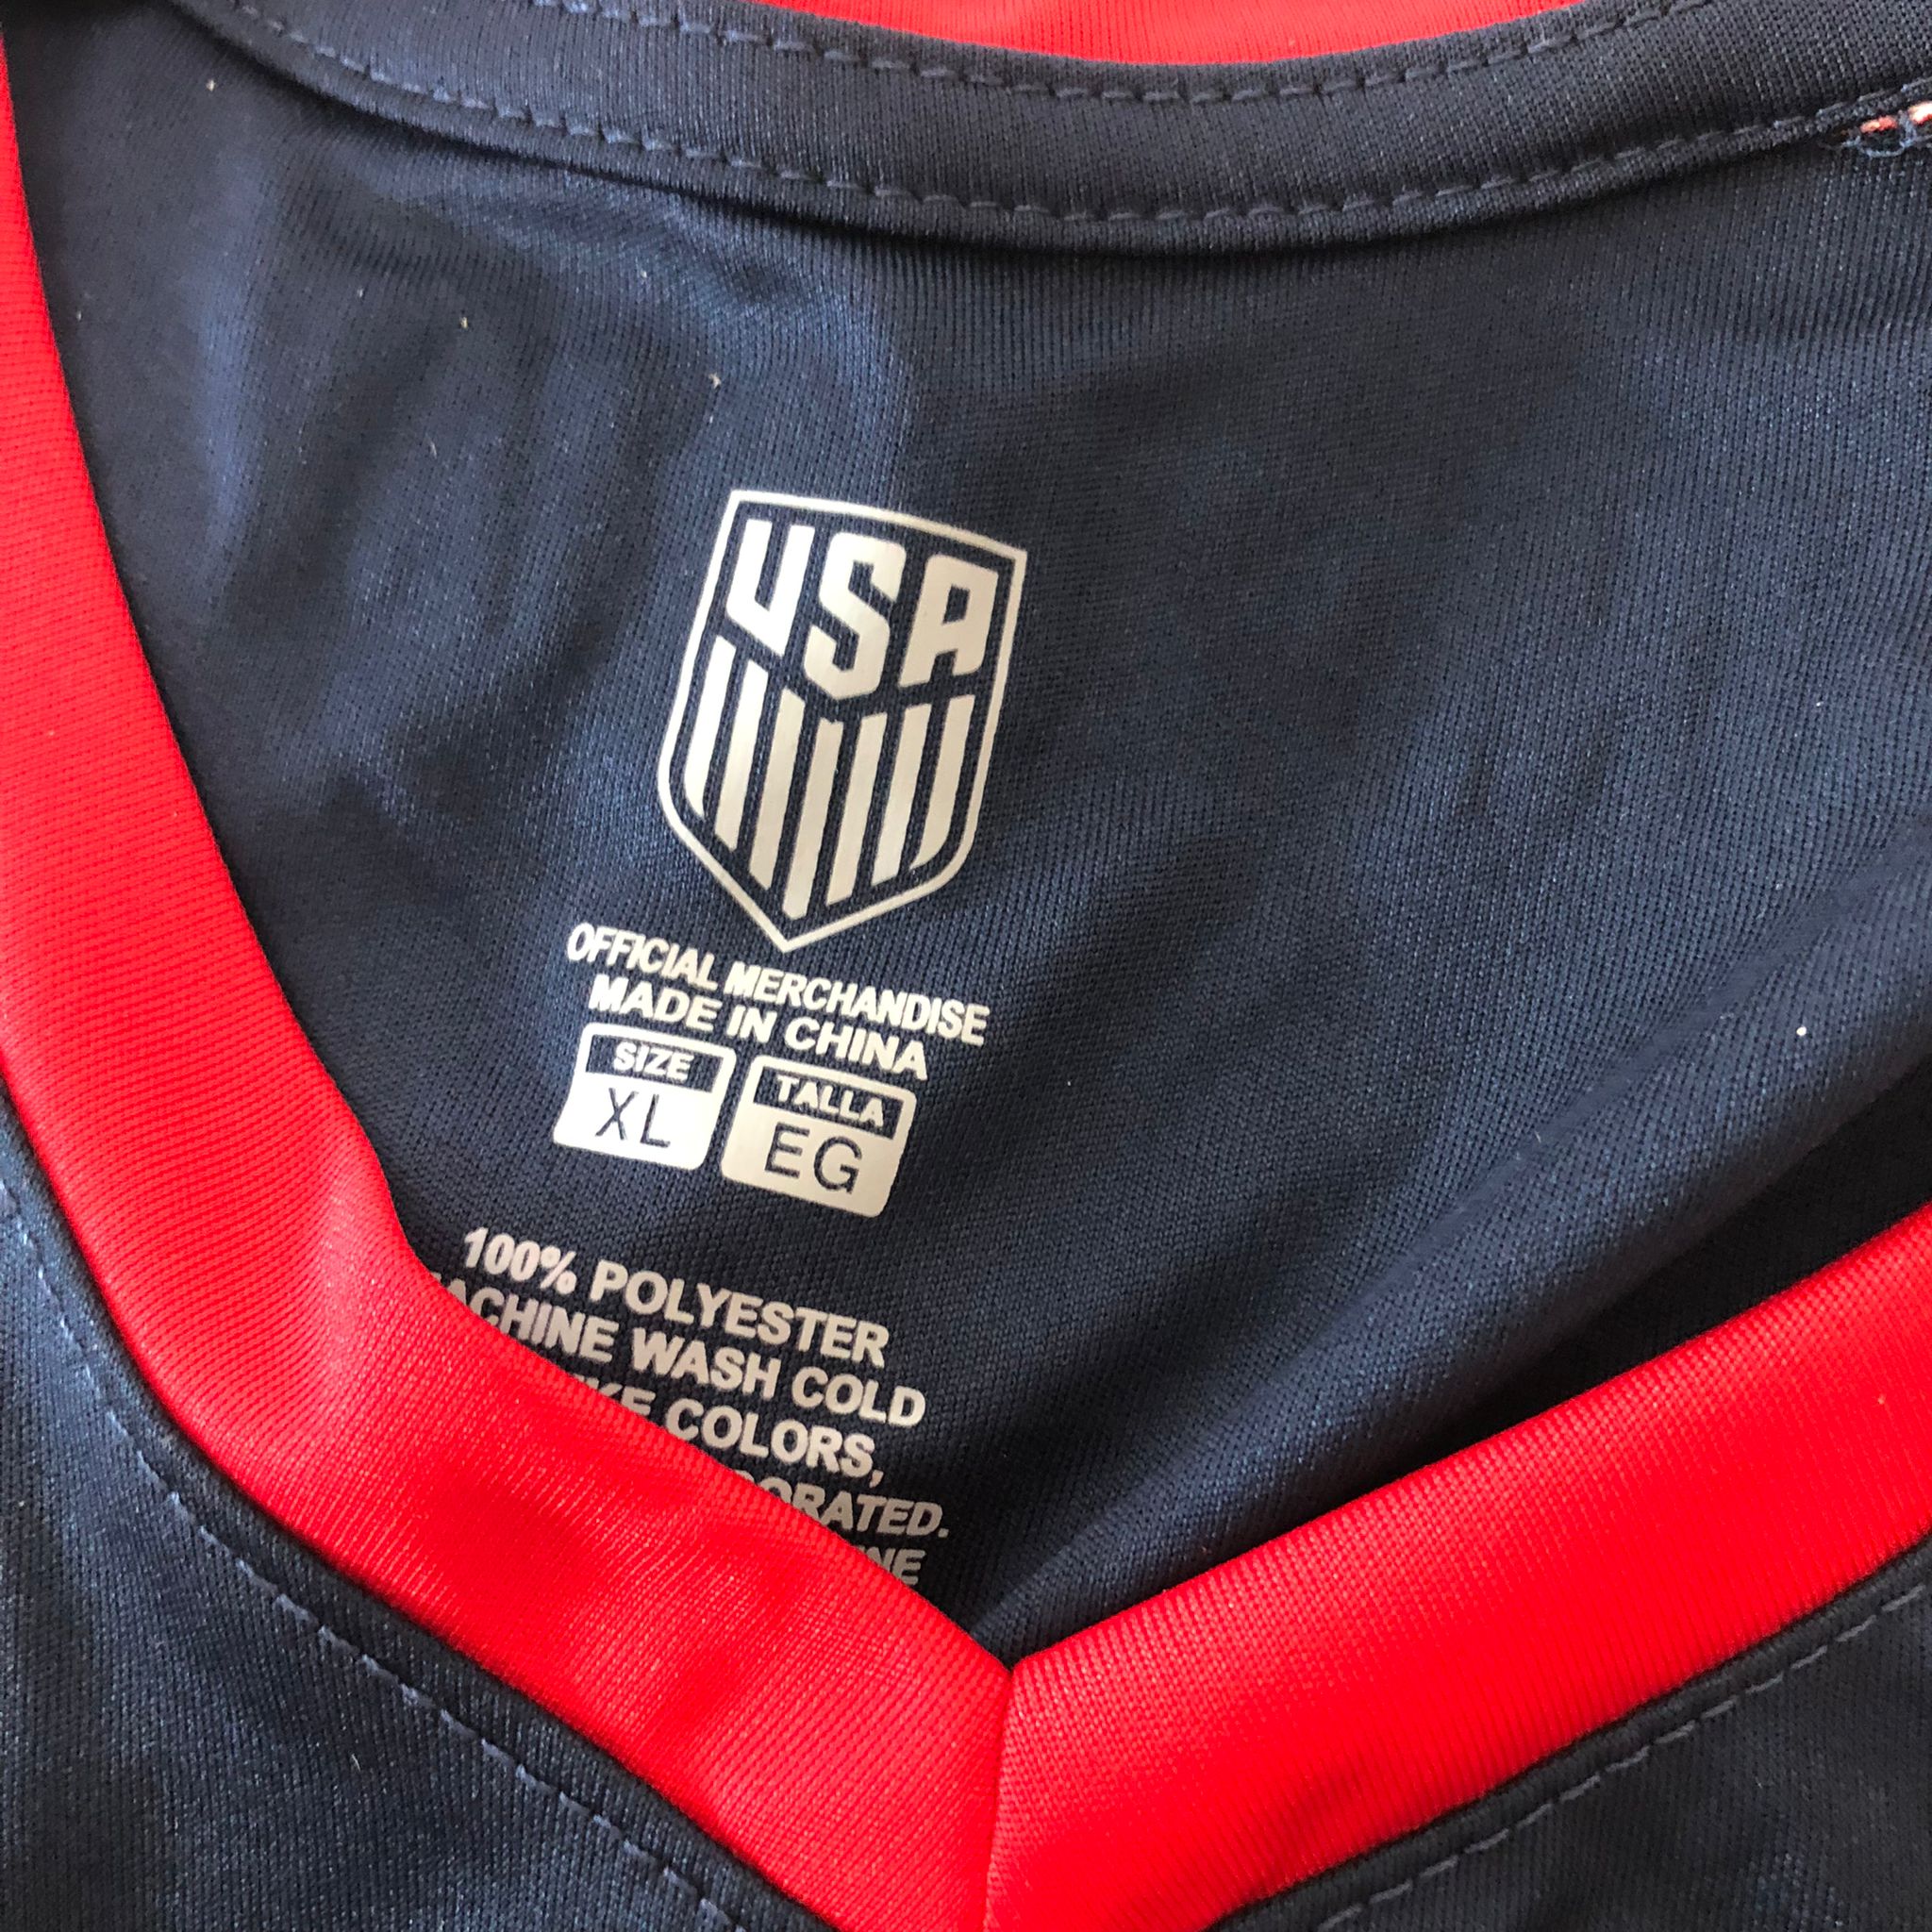 U.S. Soccer USMNT Adult All-Star Game Day Shirt